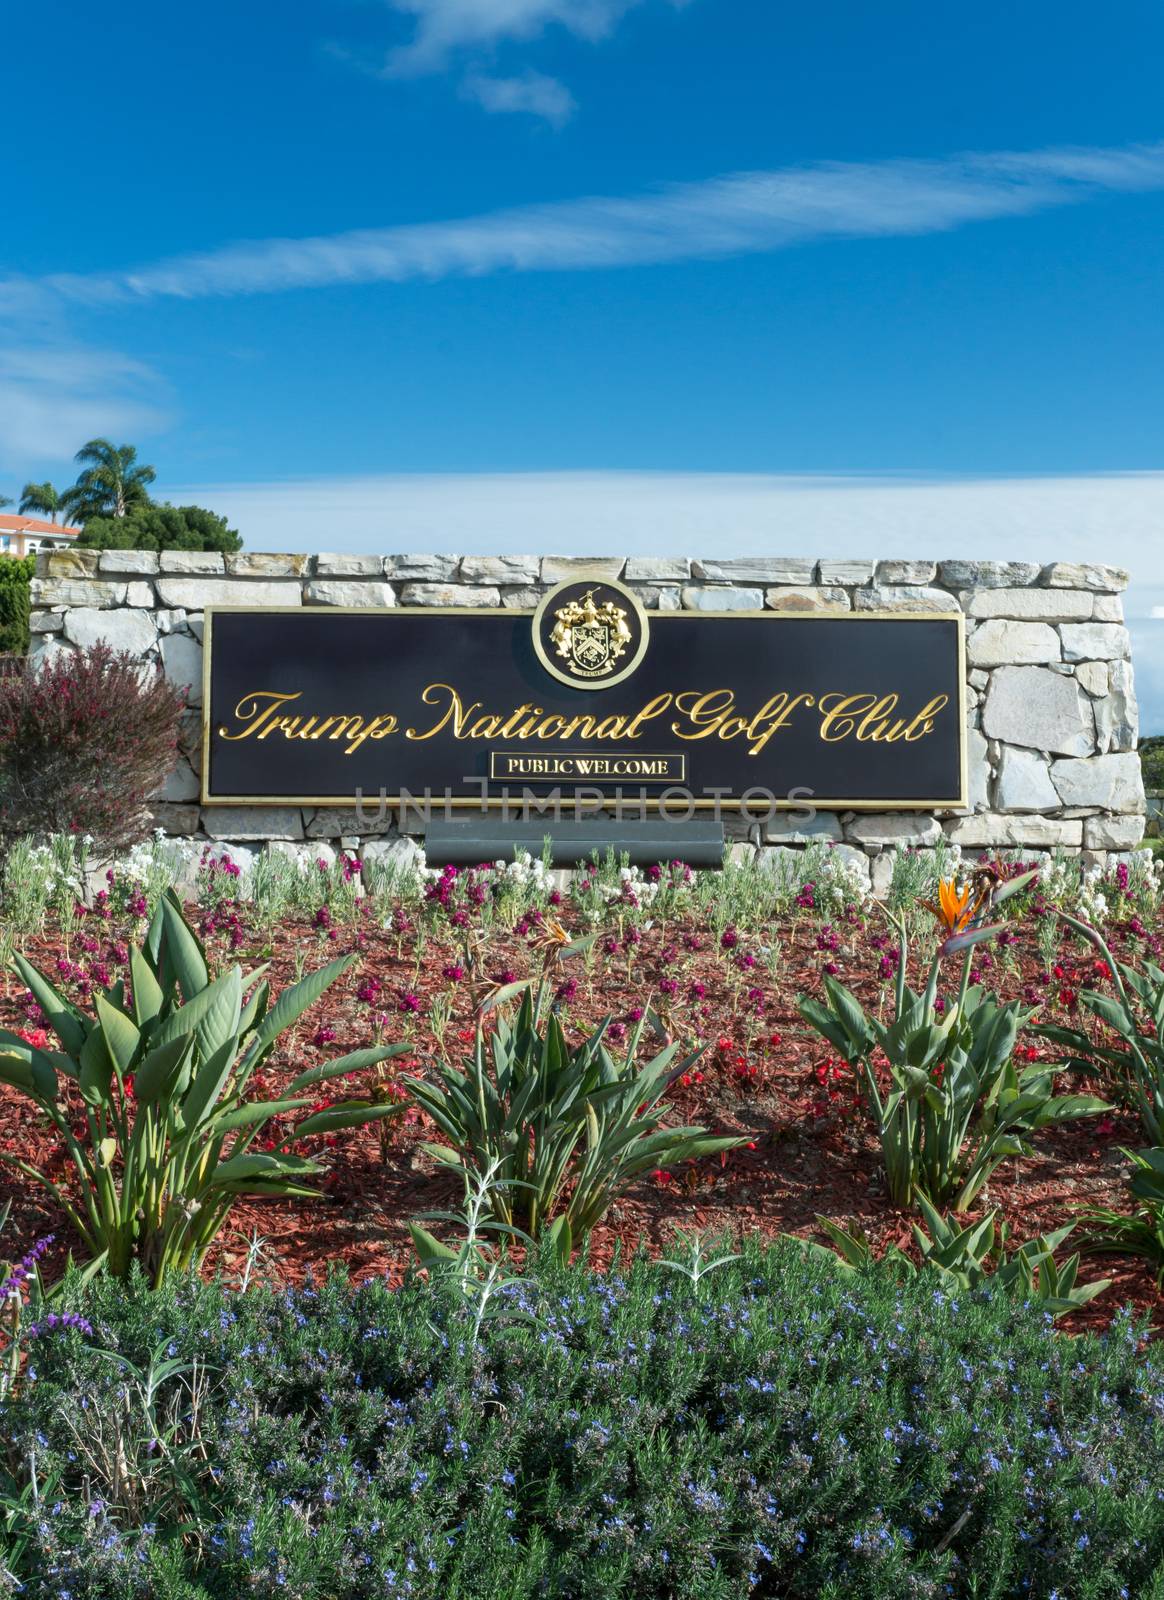 RANCHO PALOS VERDES, CA/USA - FEBRUARY 28, 2015: Donald Trump National Golf Club. Trump National Golf Club is a public golf course near Los Angeles.